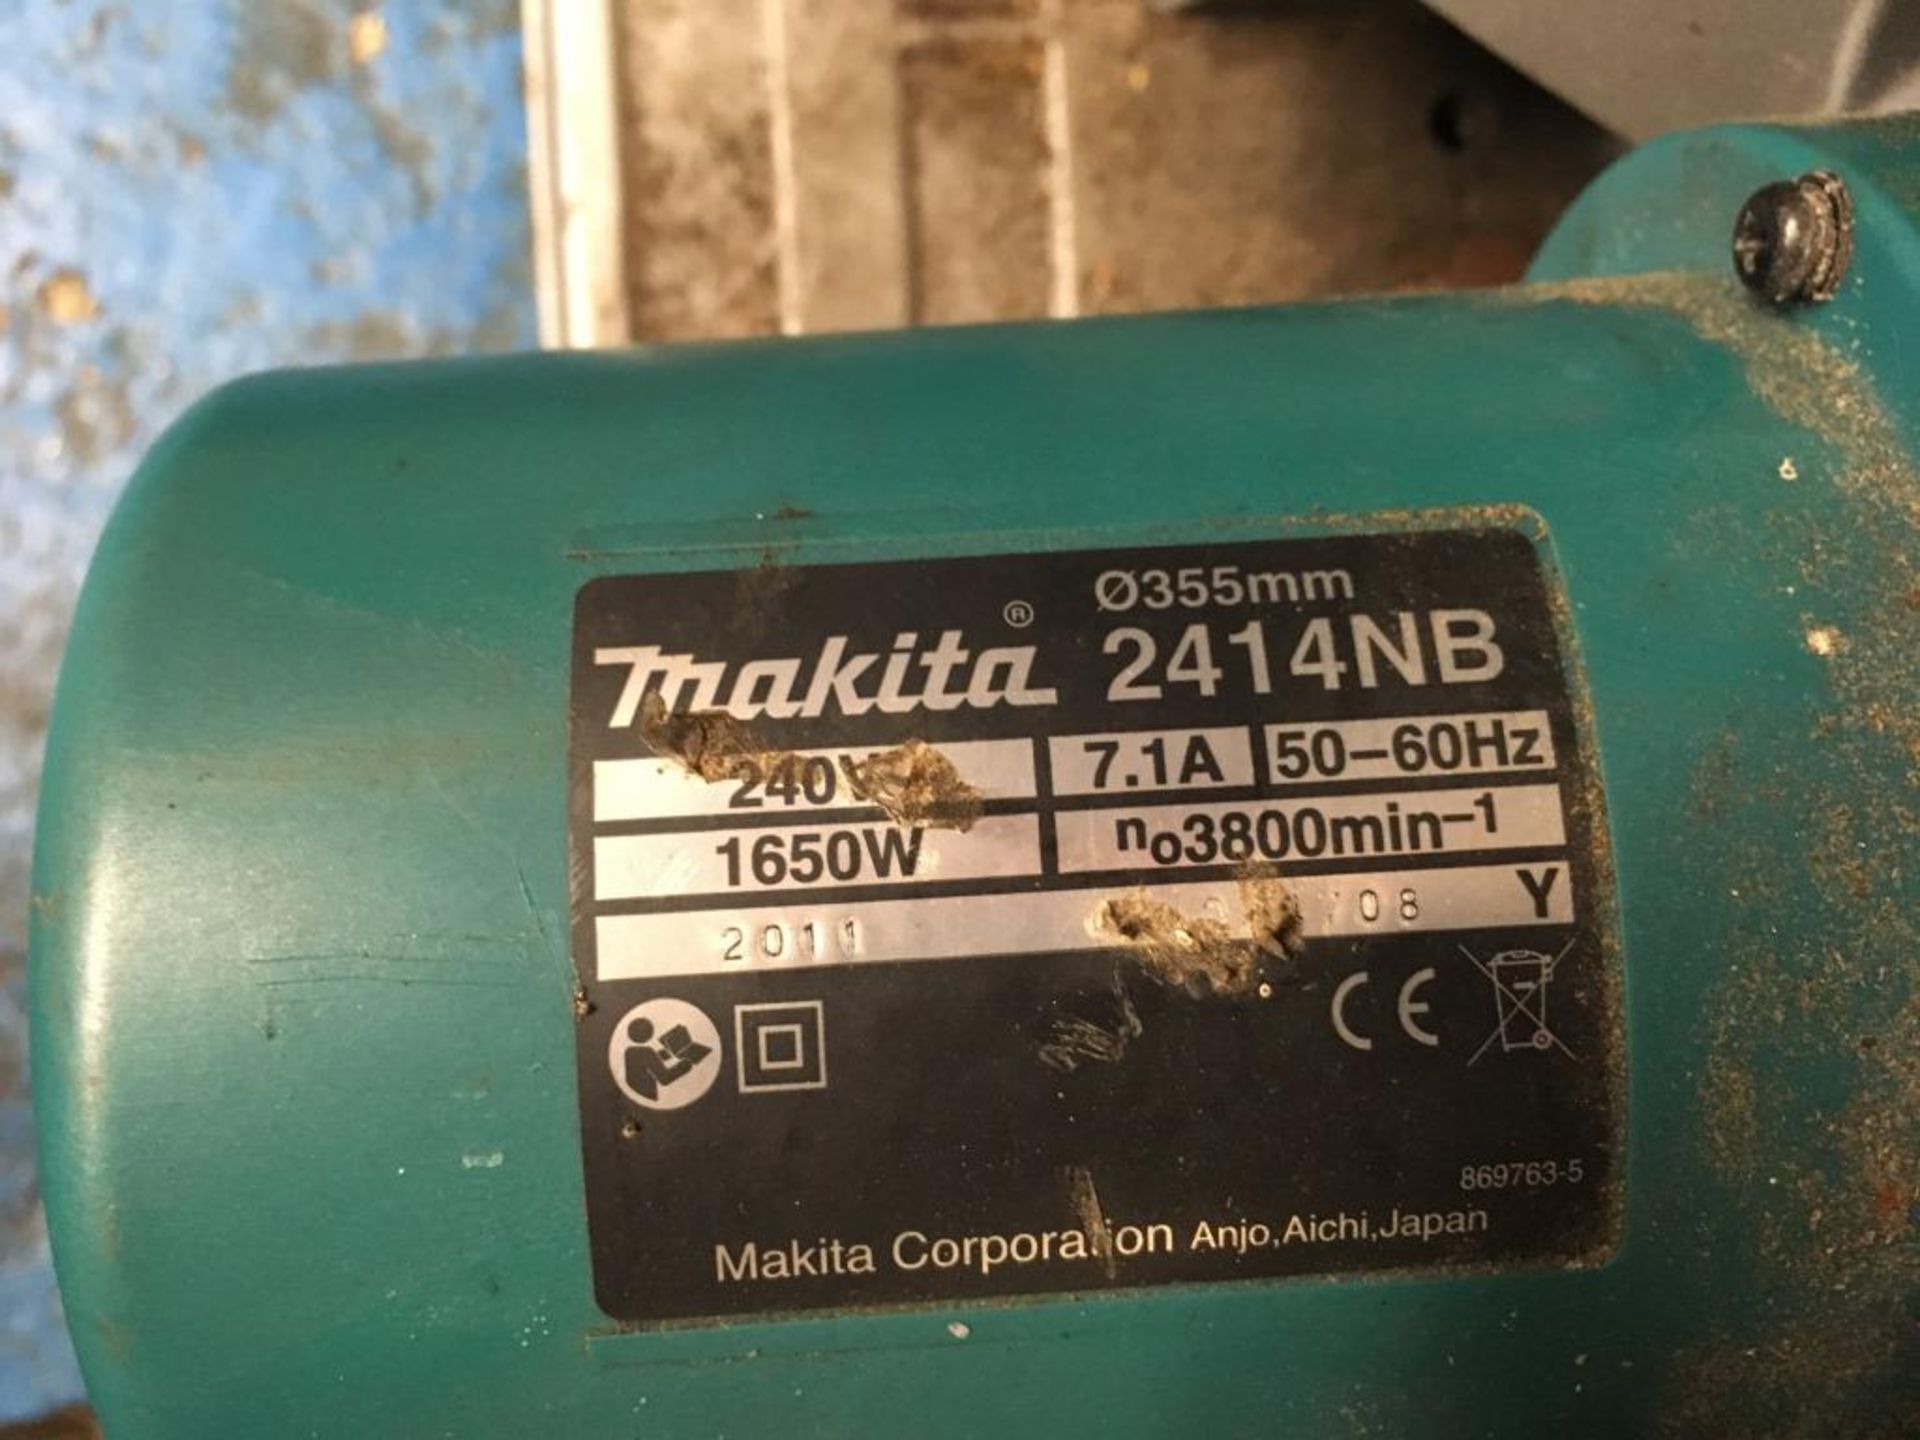 Makita 2414NB abrasive cut off saw, 240V - Image 2 of 4